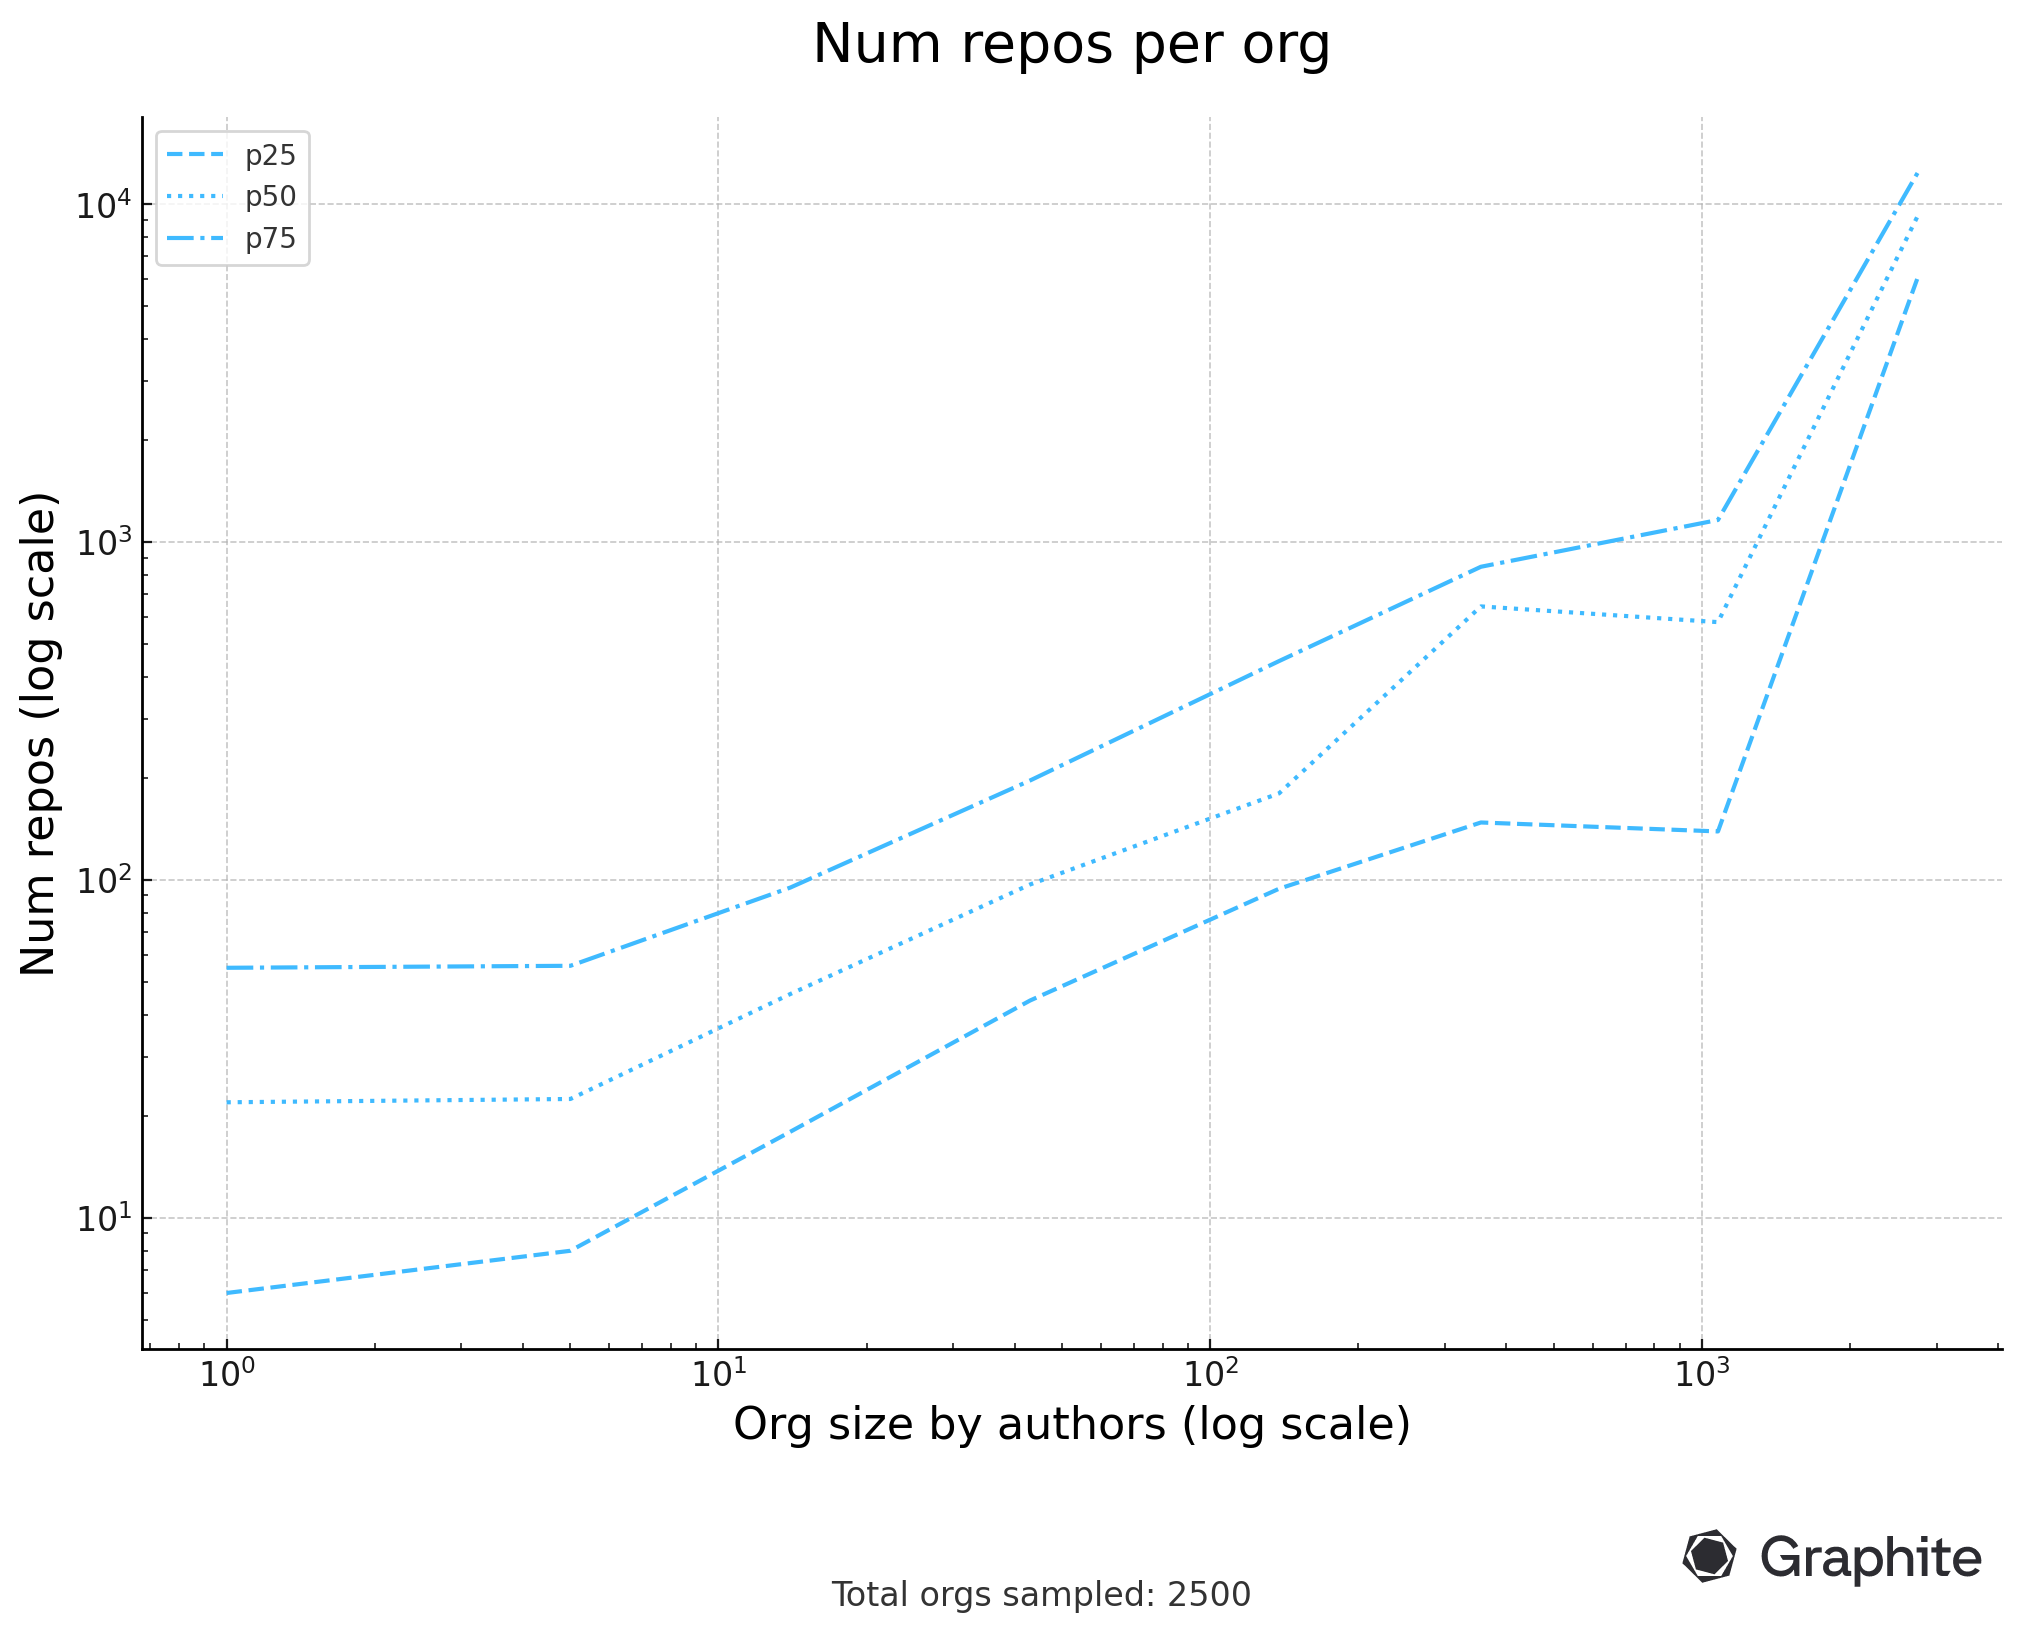 Number of repositories per org